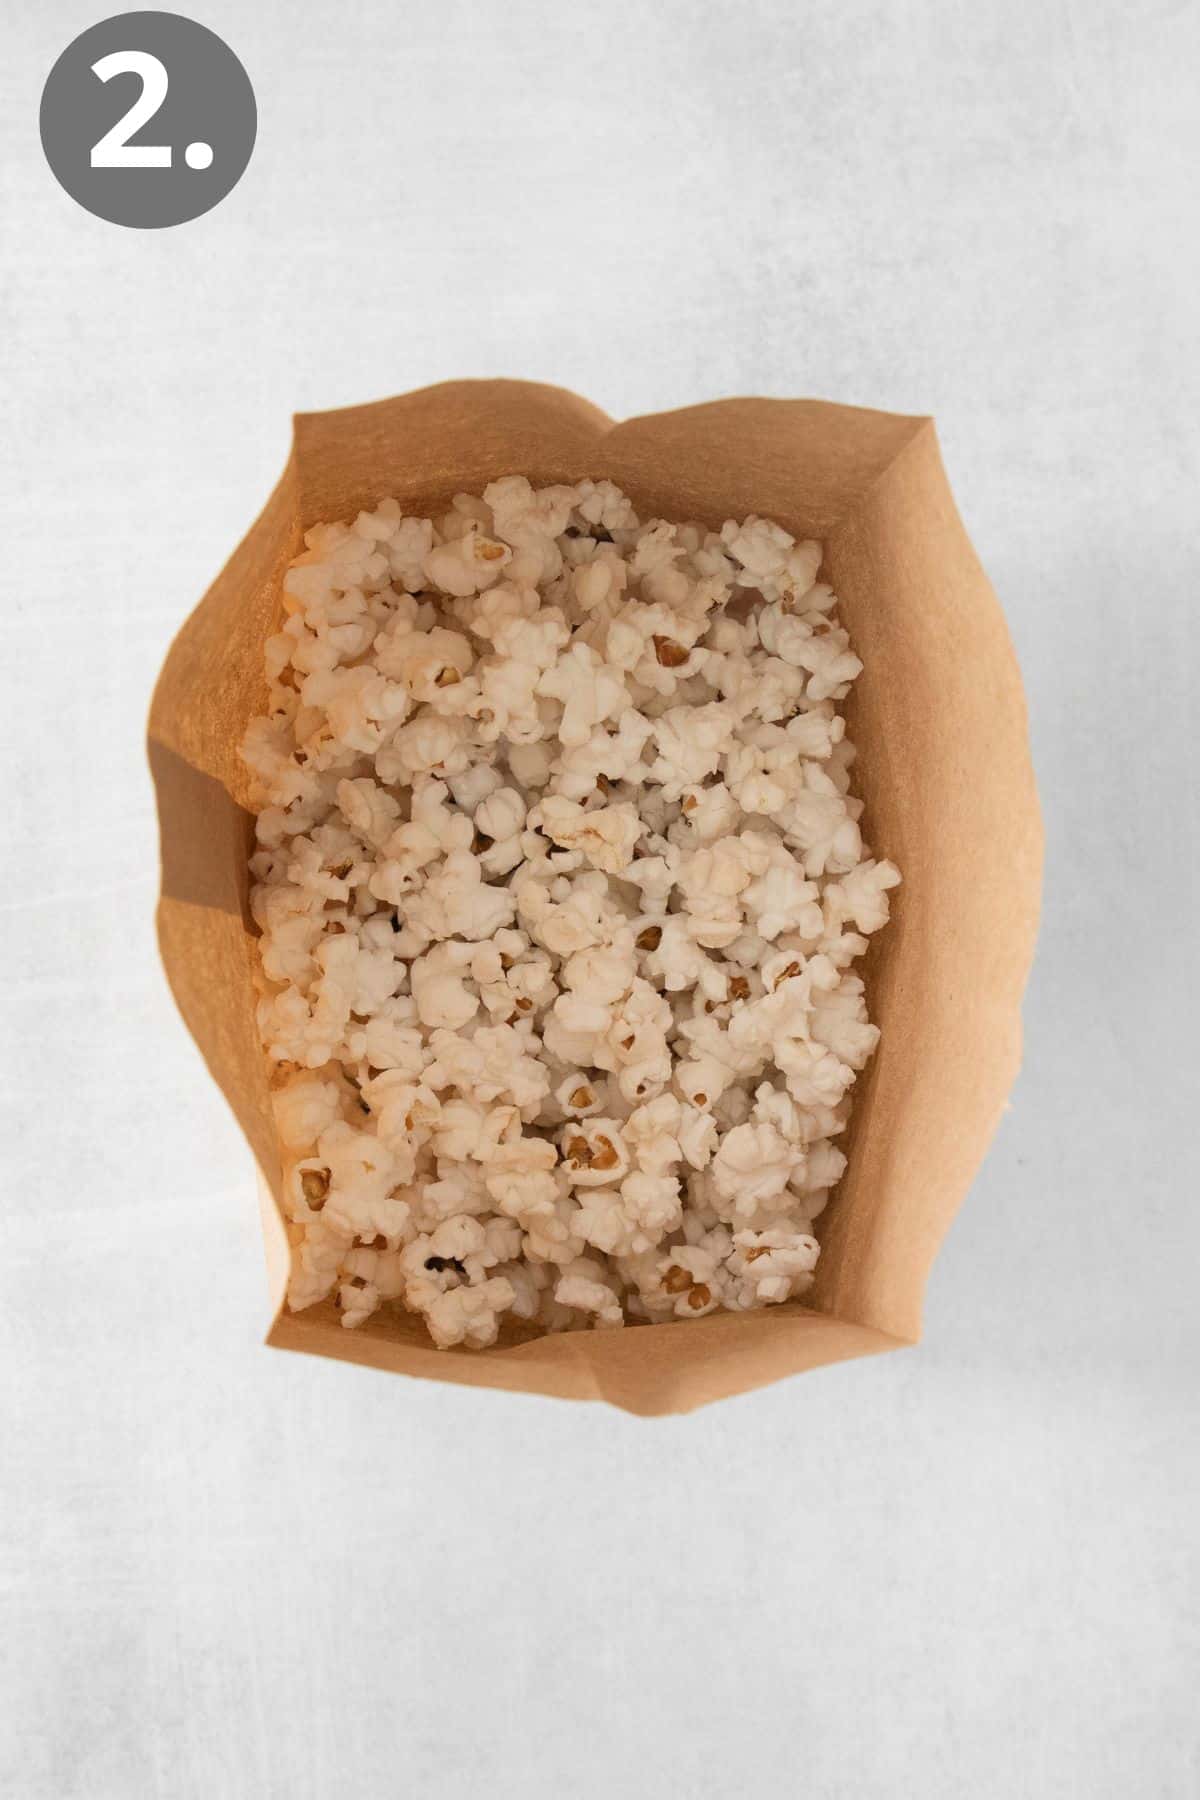 Popcorn in a brown bag